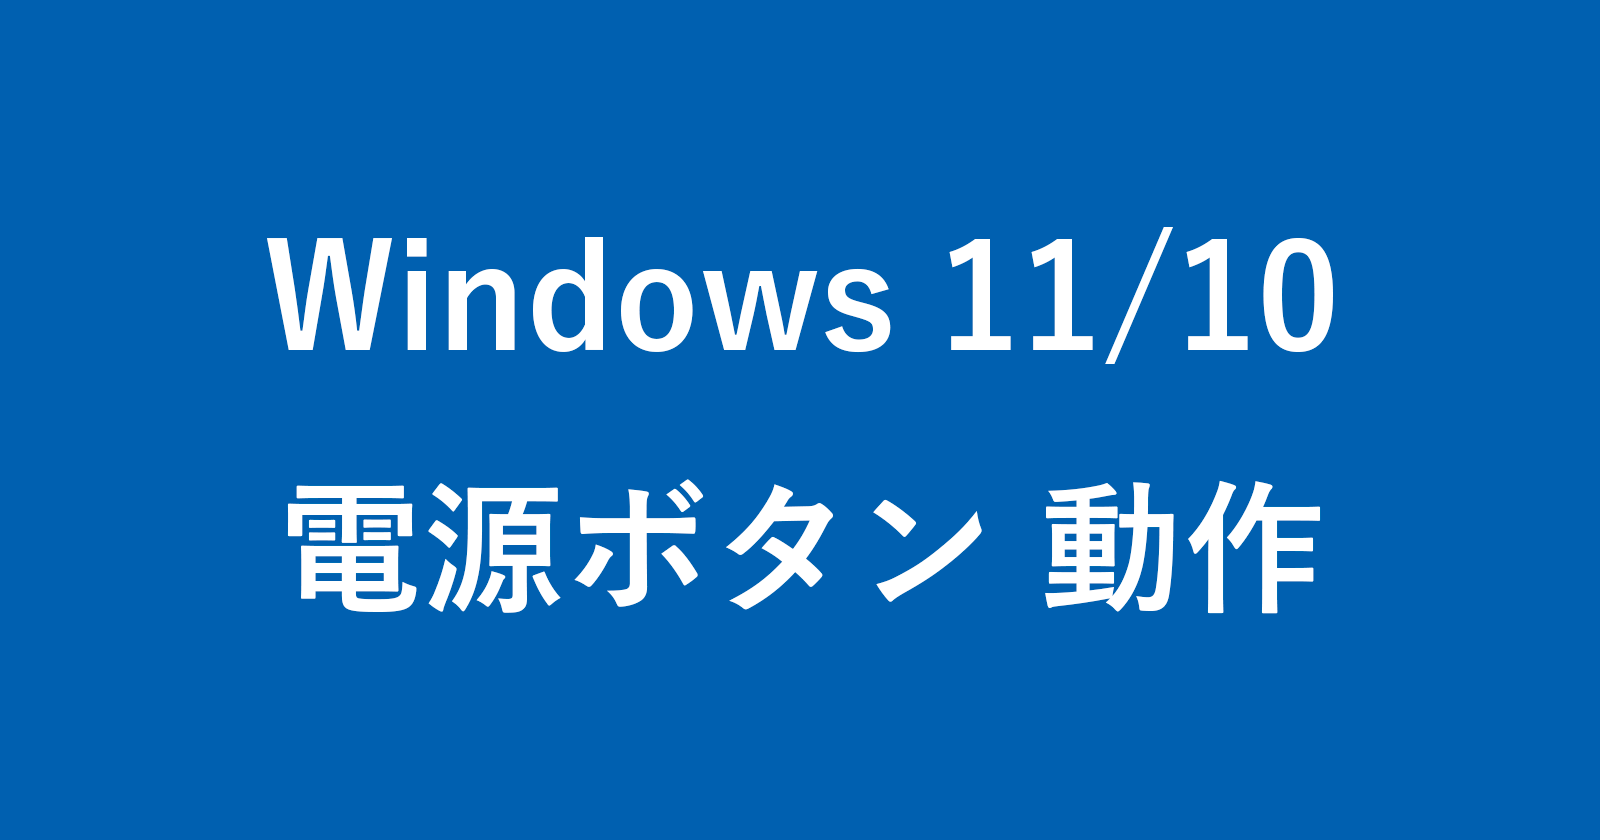 windows 11 10 power button